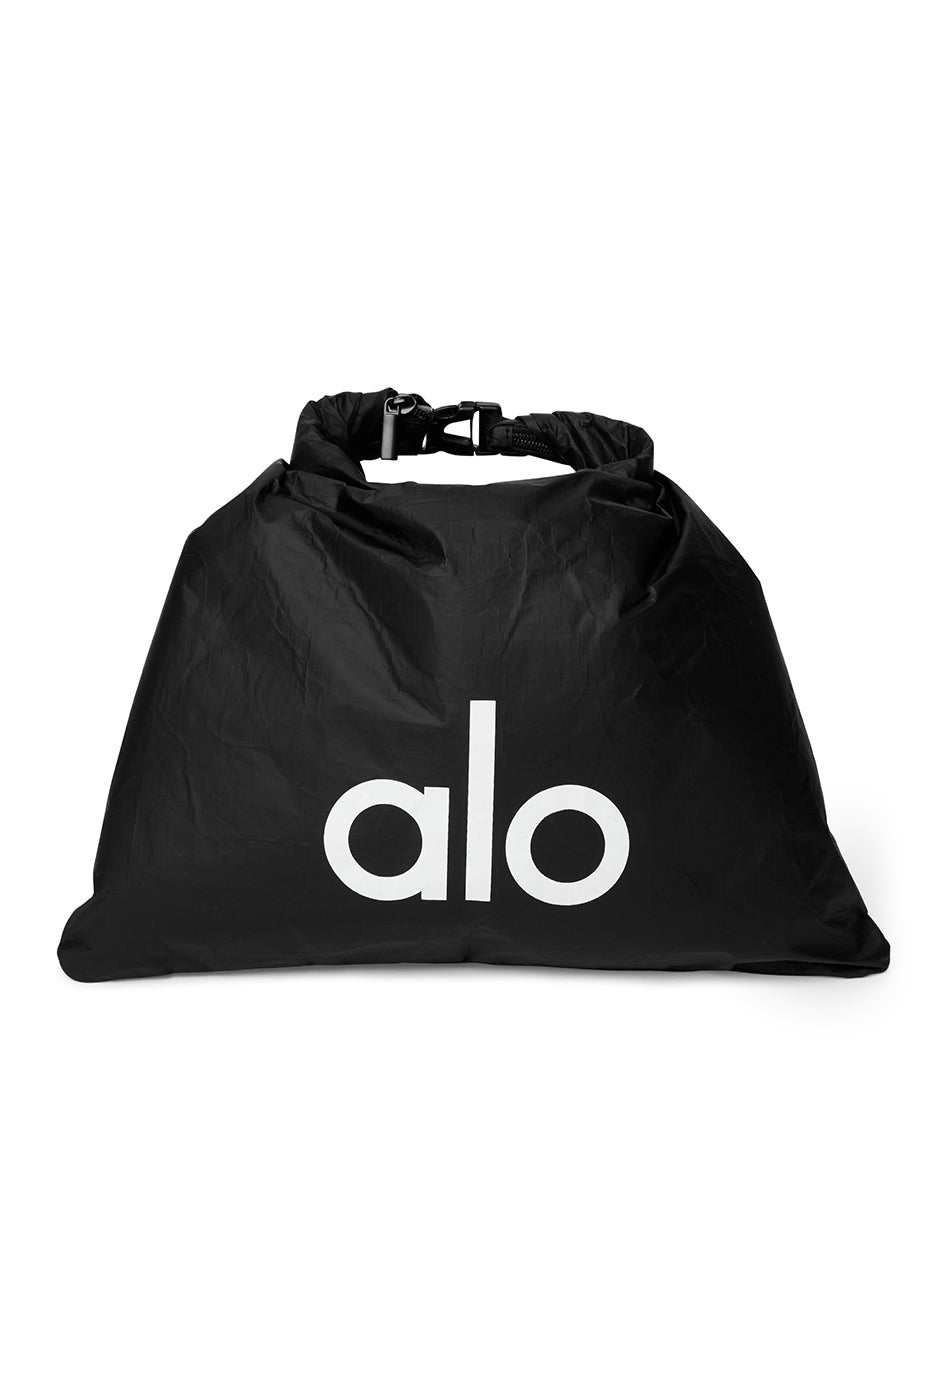 Keep It Dry Fitness Bag in Black by Alo Yoga - International Design Forum